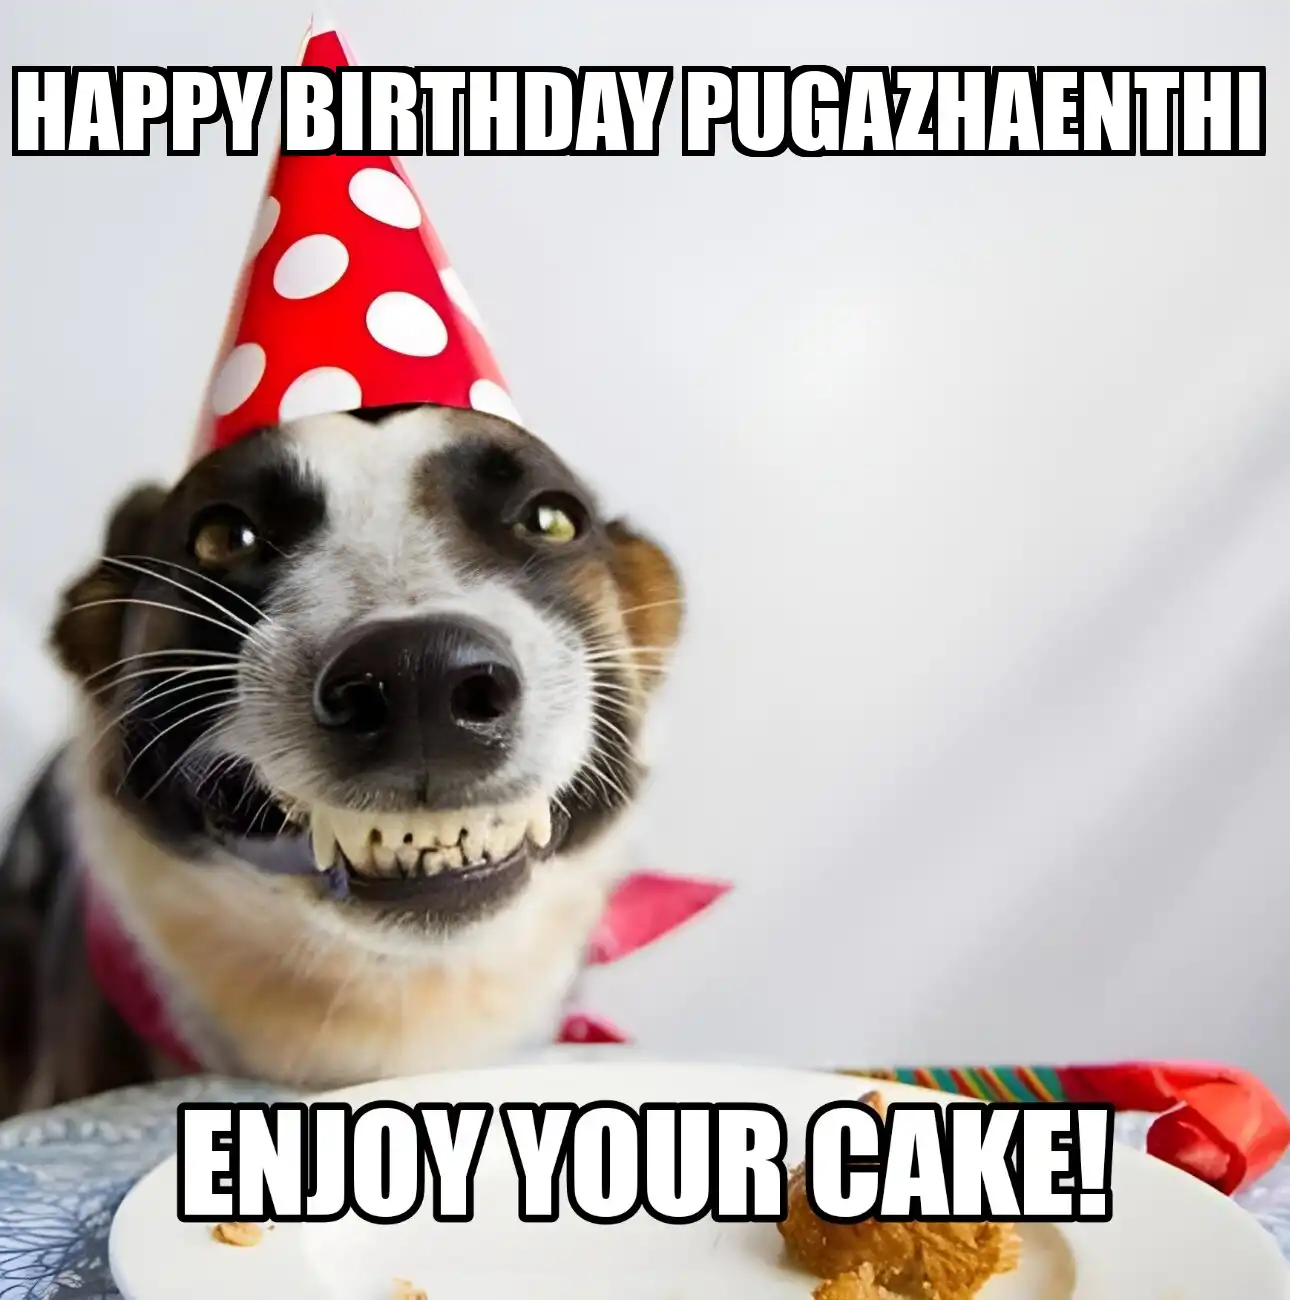 Happy Birthday Pugazhaenthi Enjoy Your Cake Dog Meme